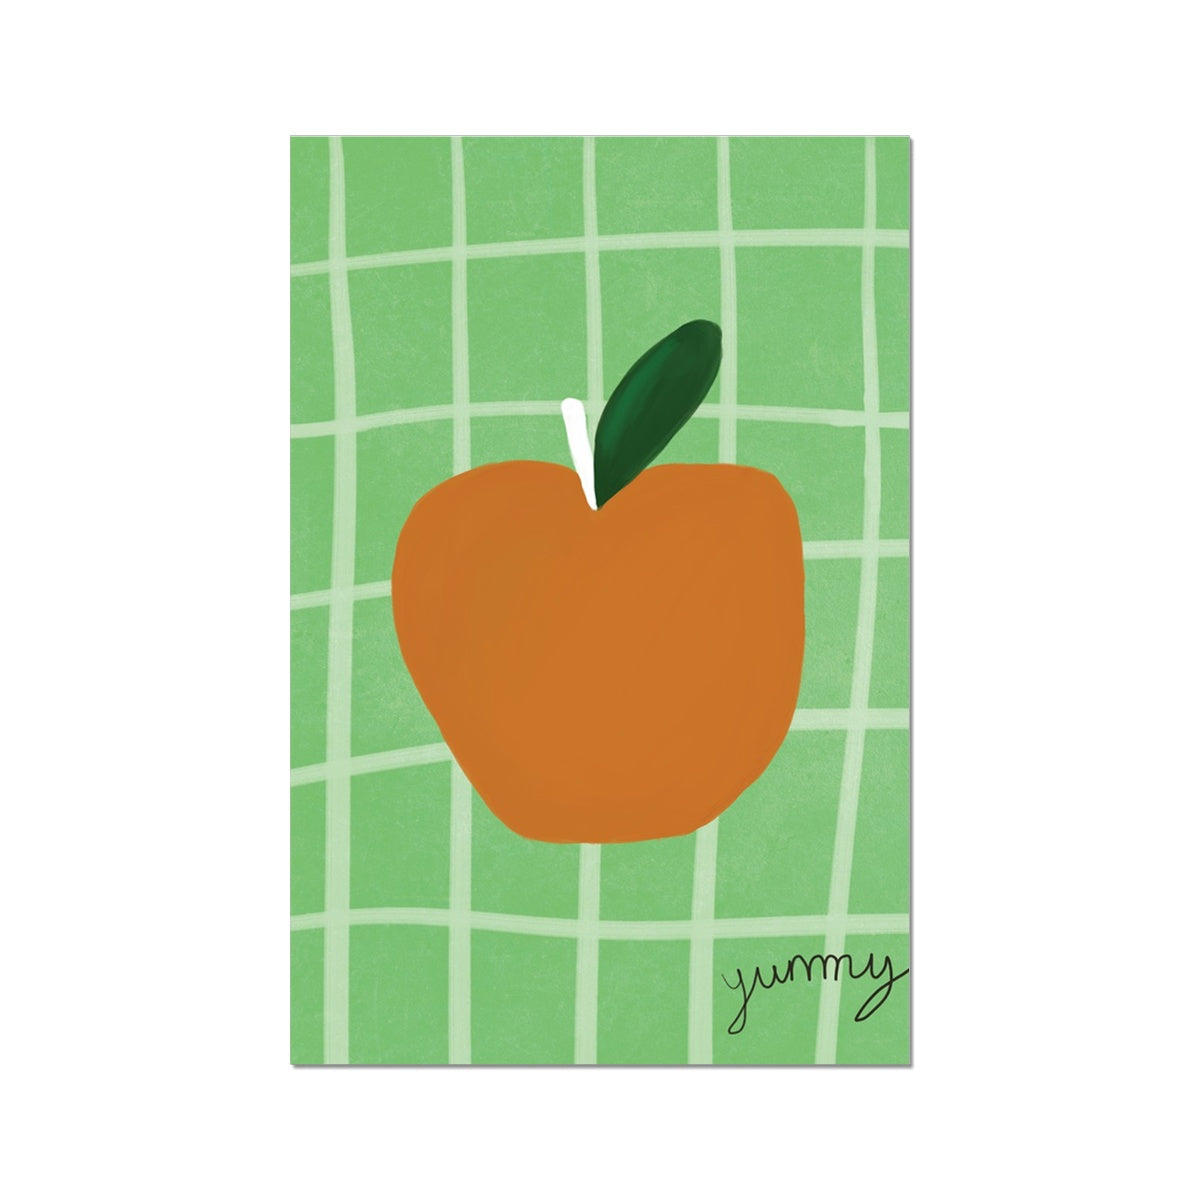 Yummy Apple Print - Green, Brown Fine Art Print